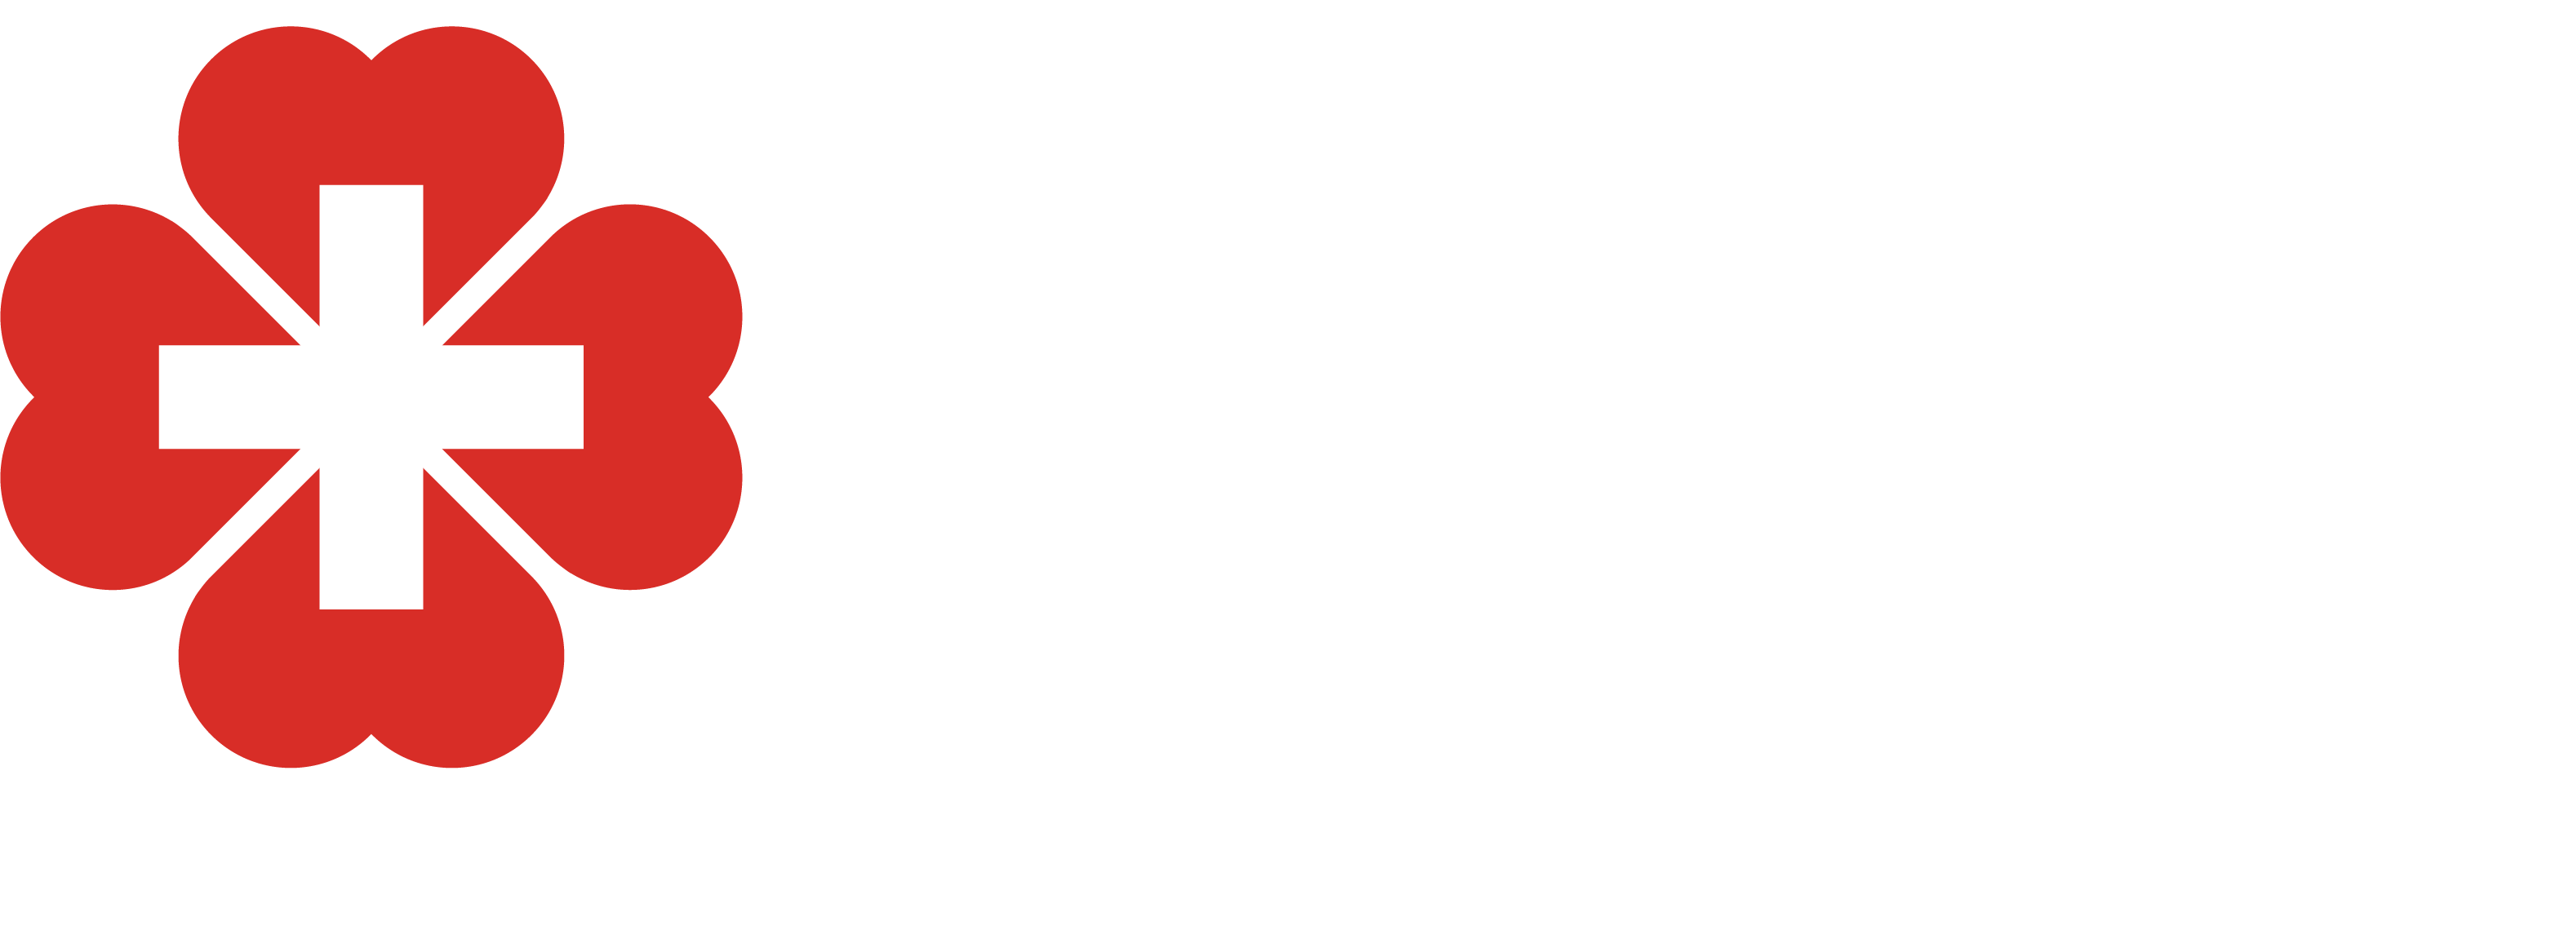 Equality4Tourism